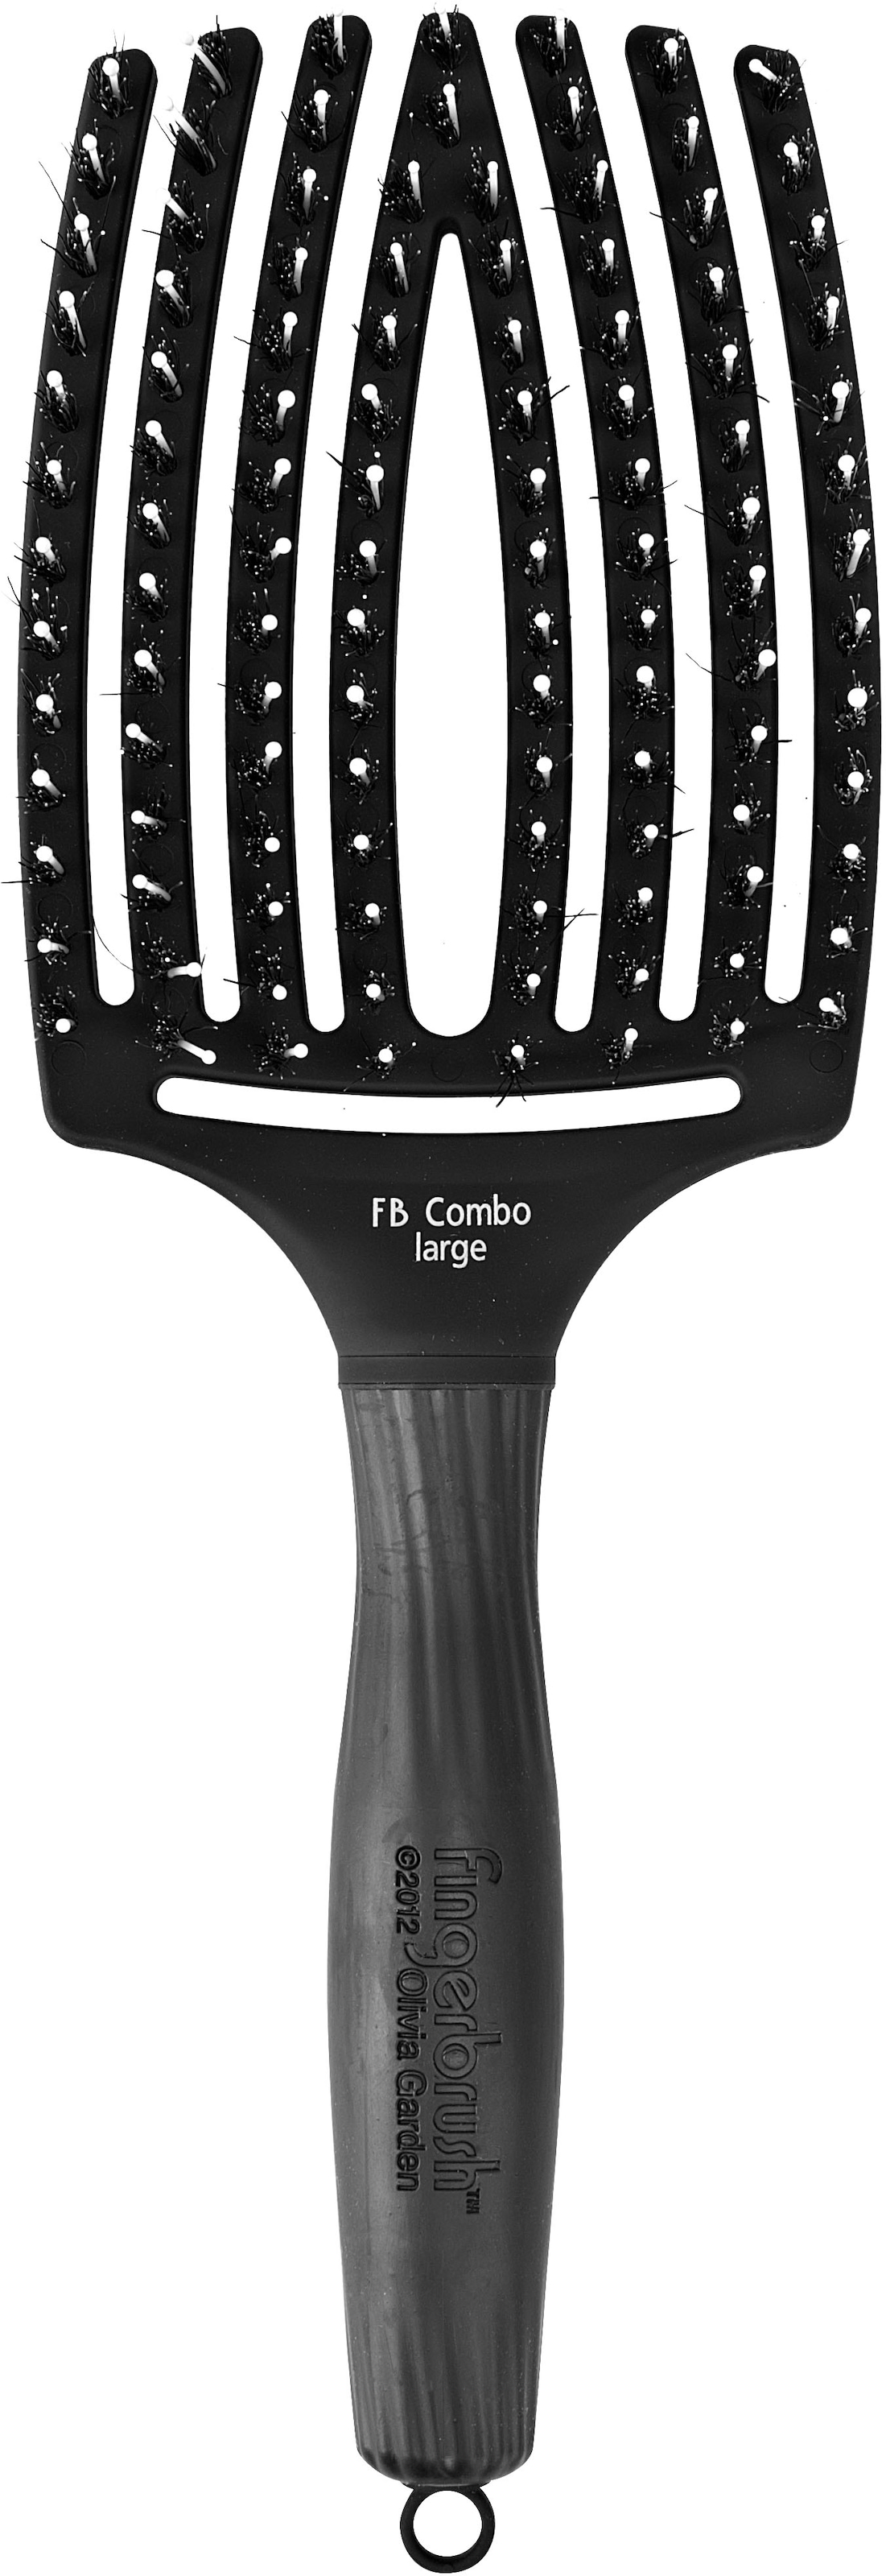 online OLIVIA bestellen OTTO bei Haarentwirrbürste »Fingerbrush large« Combo GARDEN